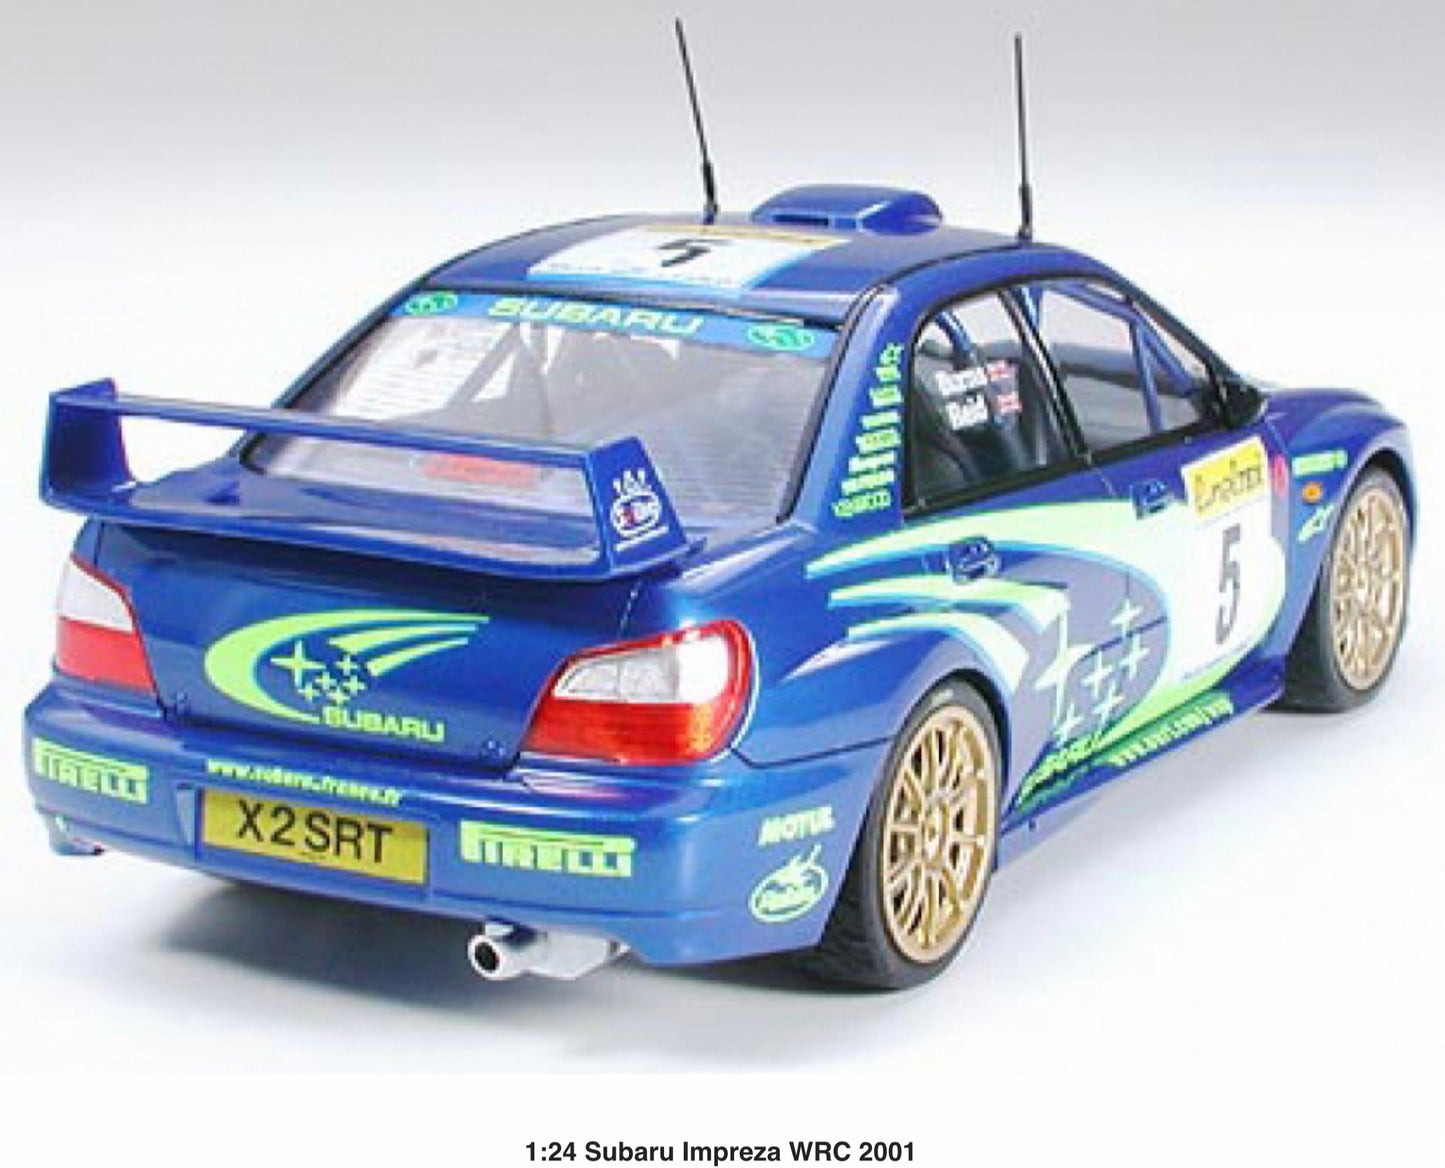 SUBARU IMPREZA WRC - RALLY MONTE CARLO 2001